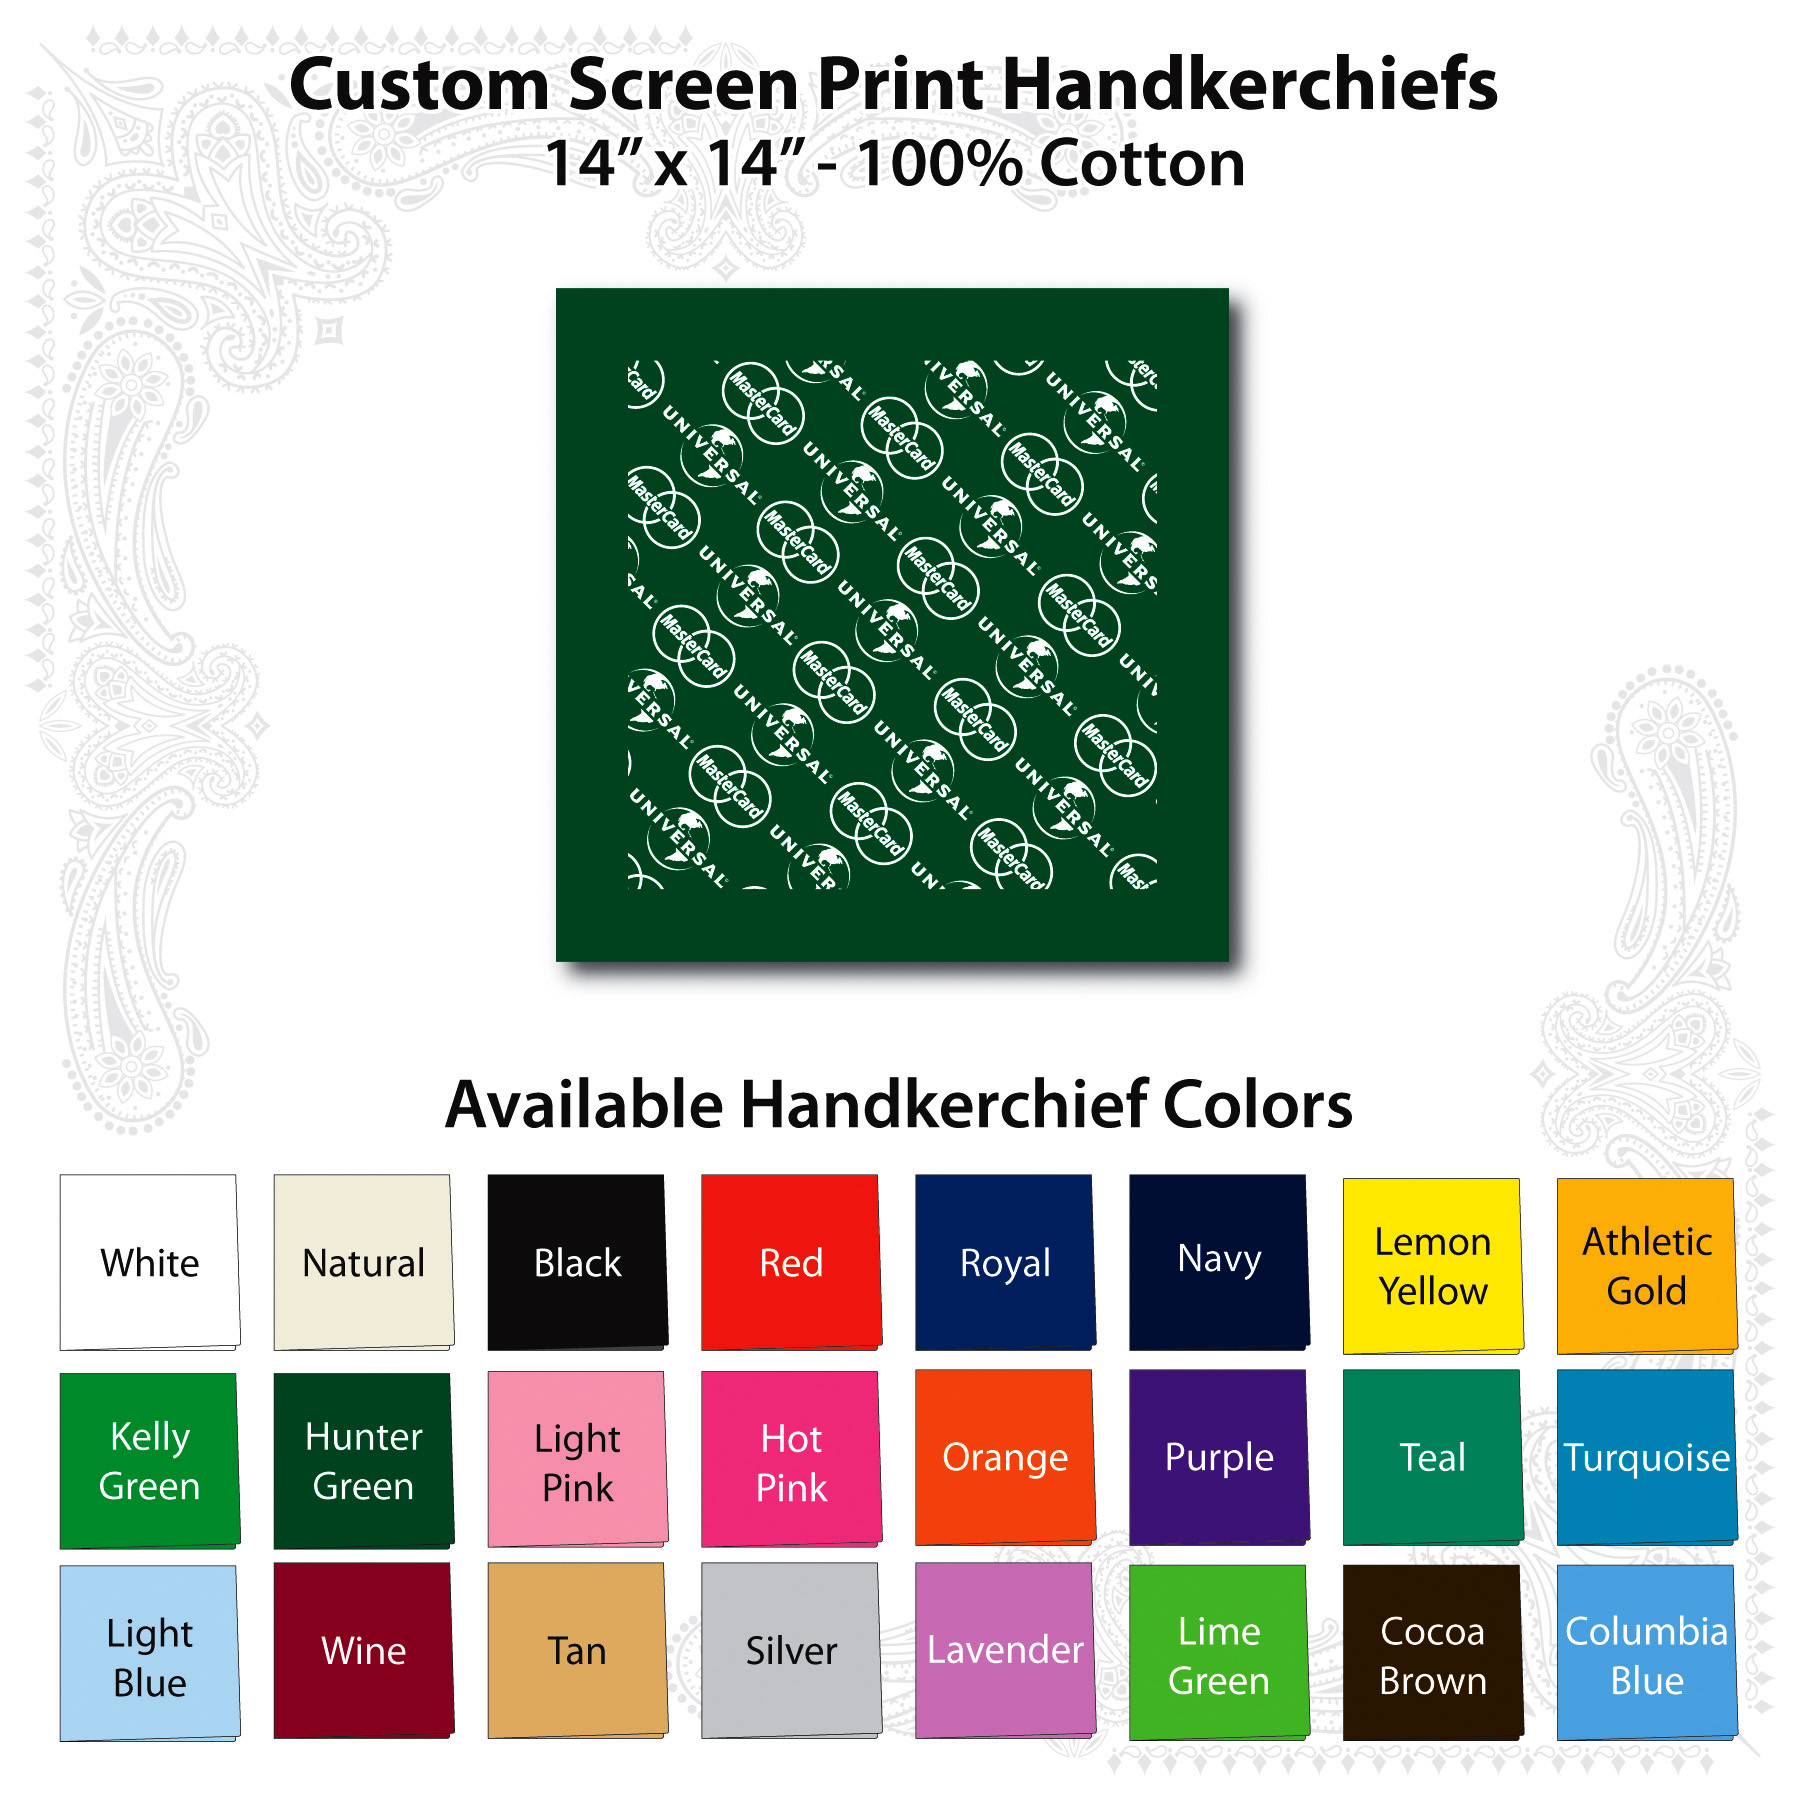 14"x14" Hunter Green Custom Printed Imported 100% Cotton Handkerchief